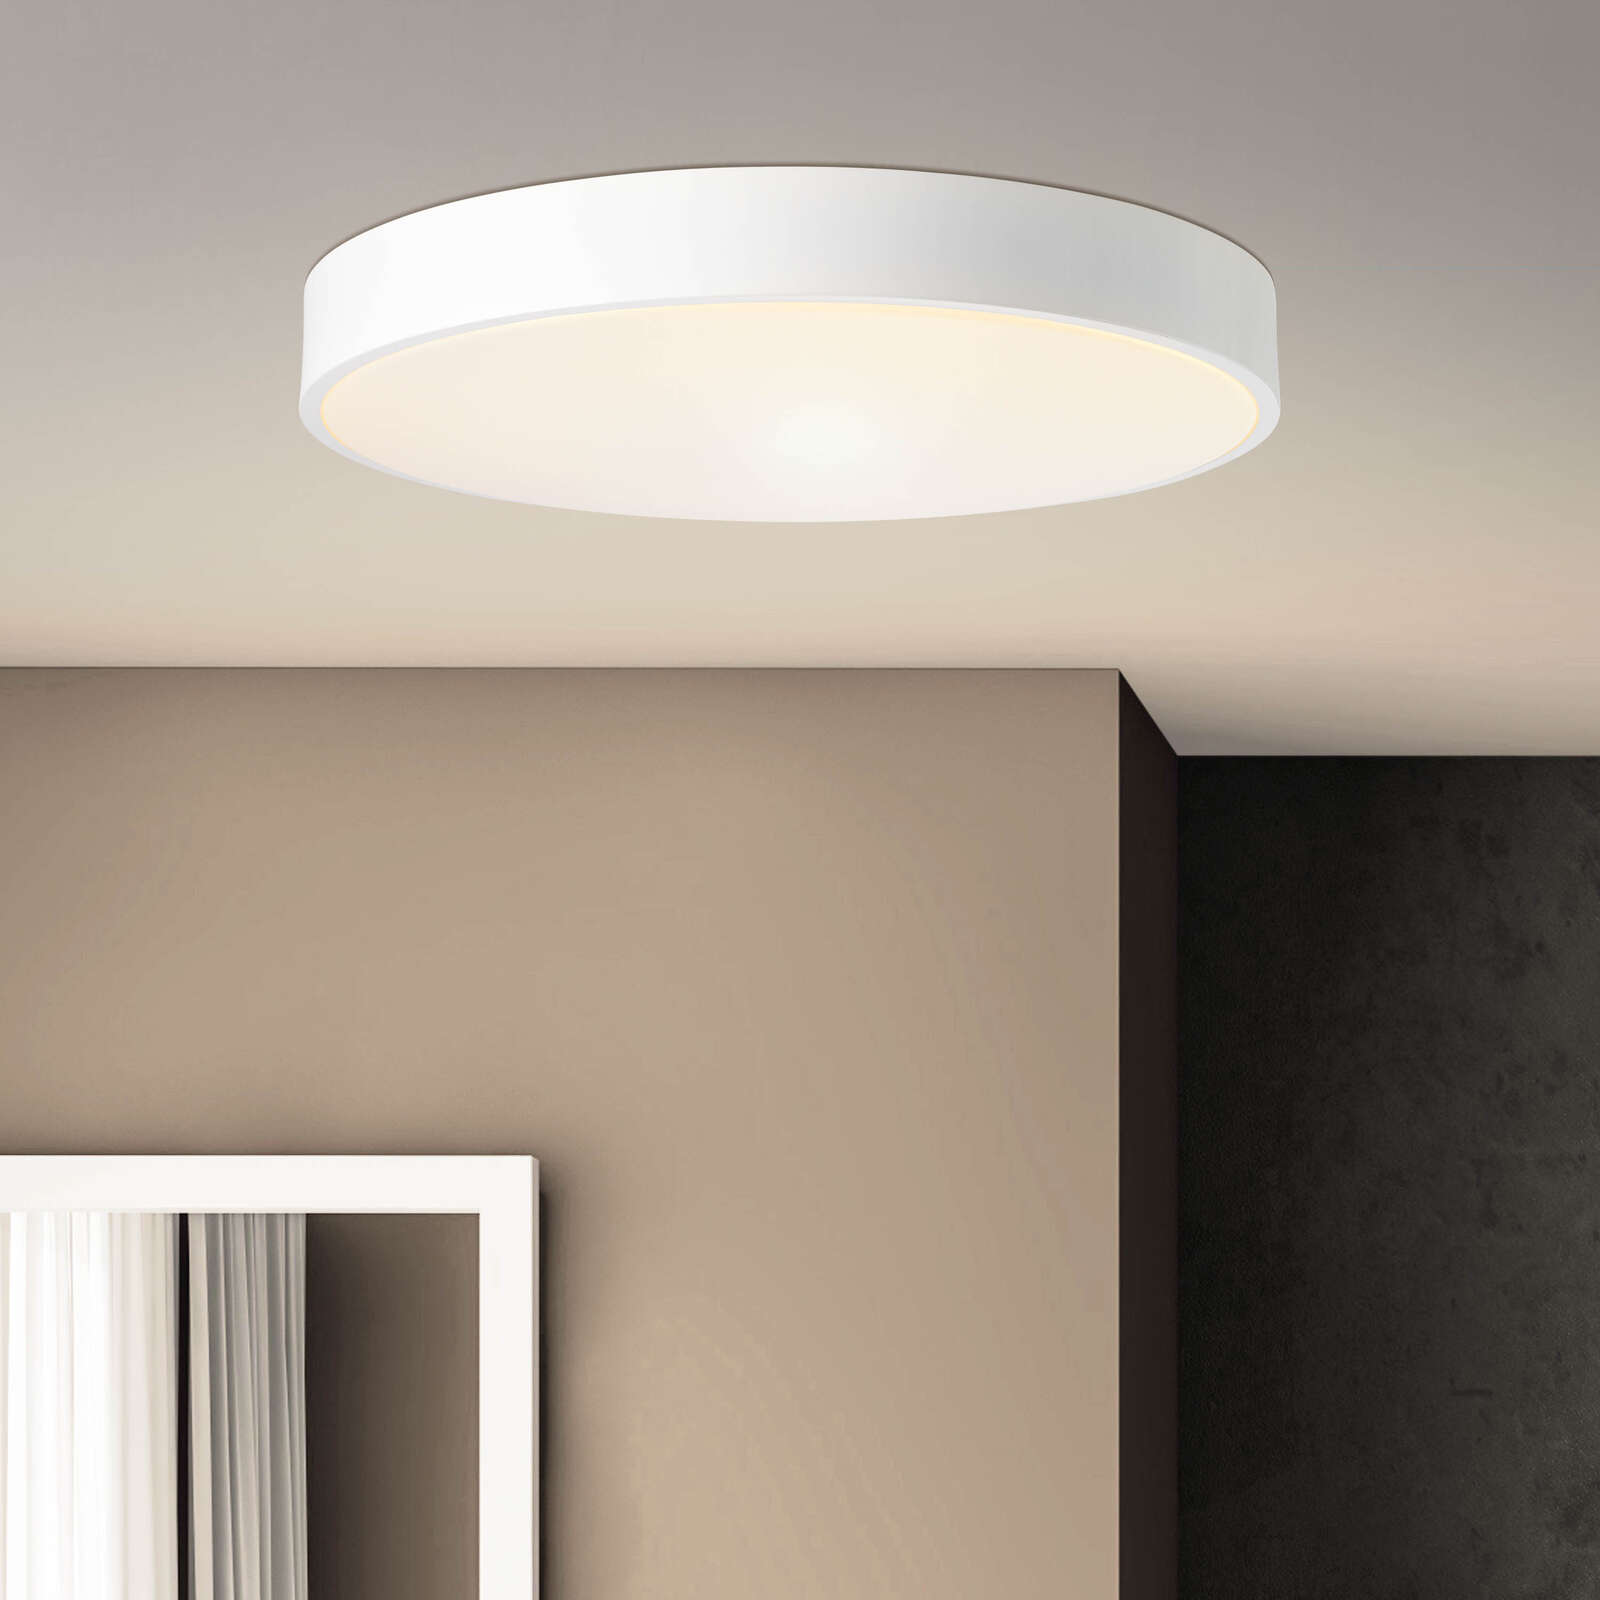             Plastic wall and ceiling light - Niklas 7 - White
        